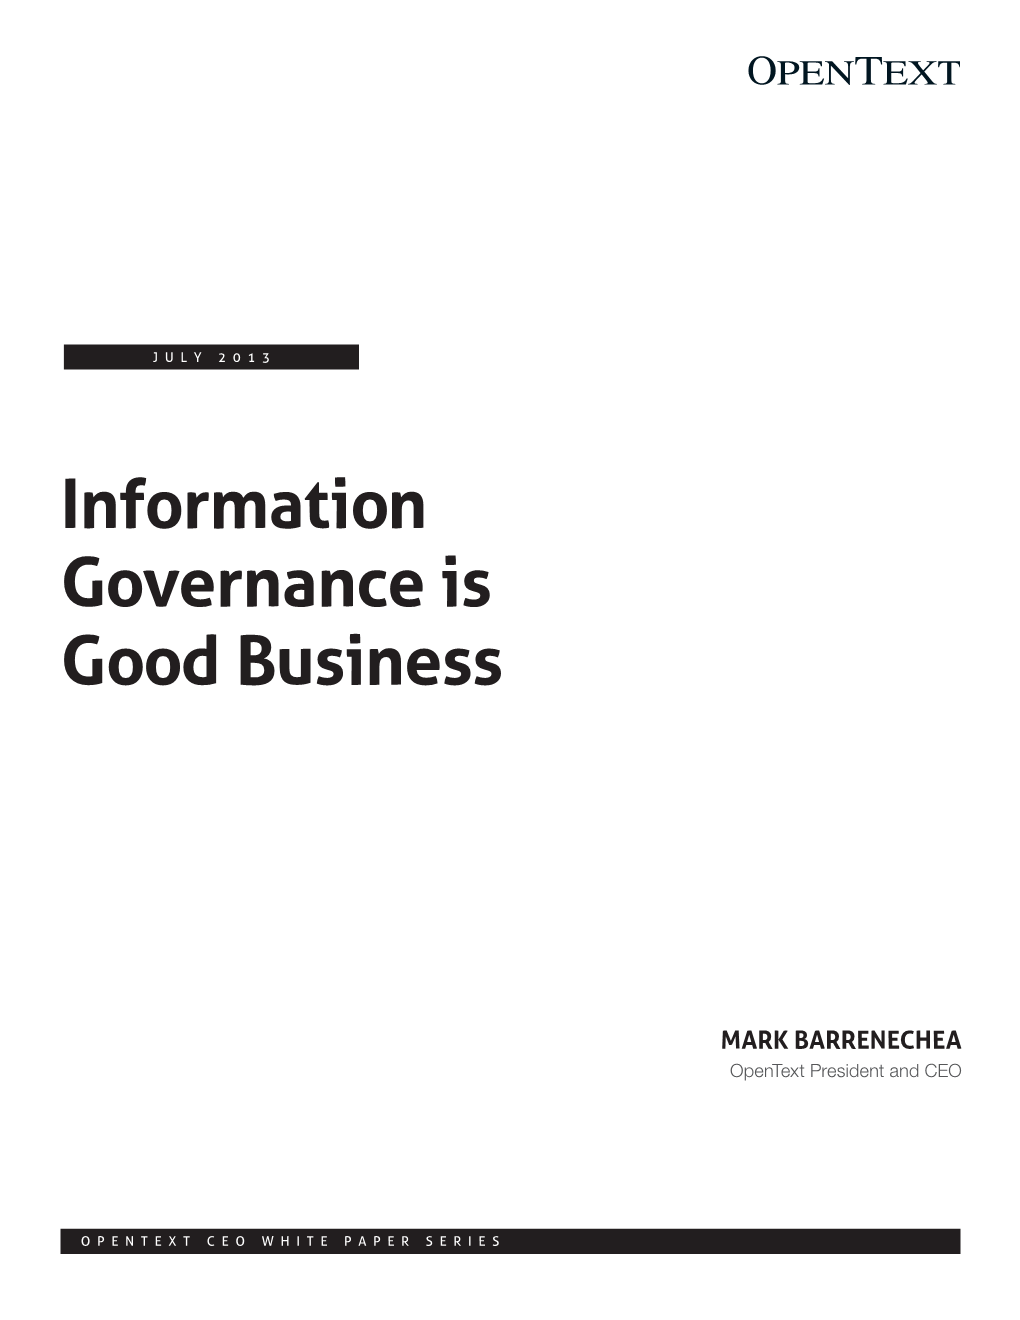 Information Governance Is Good Business